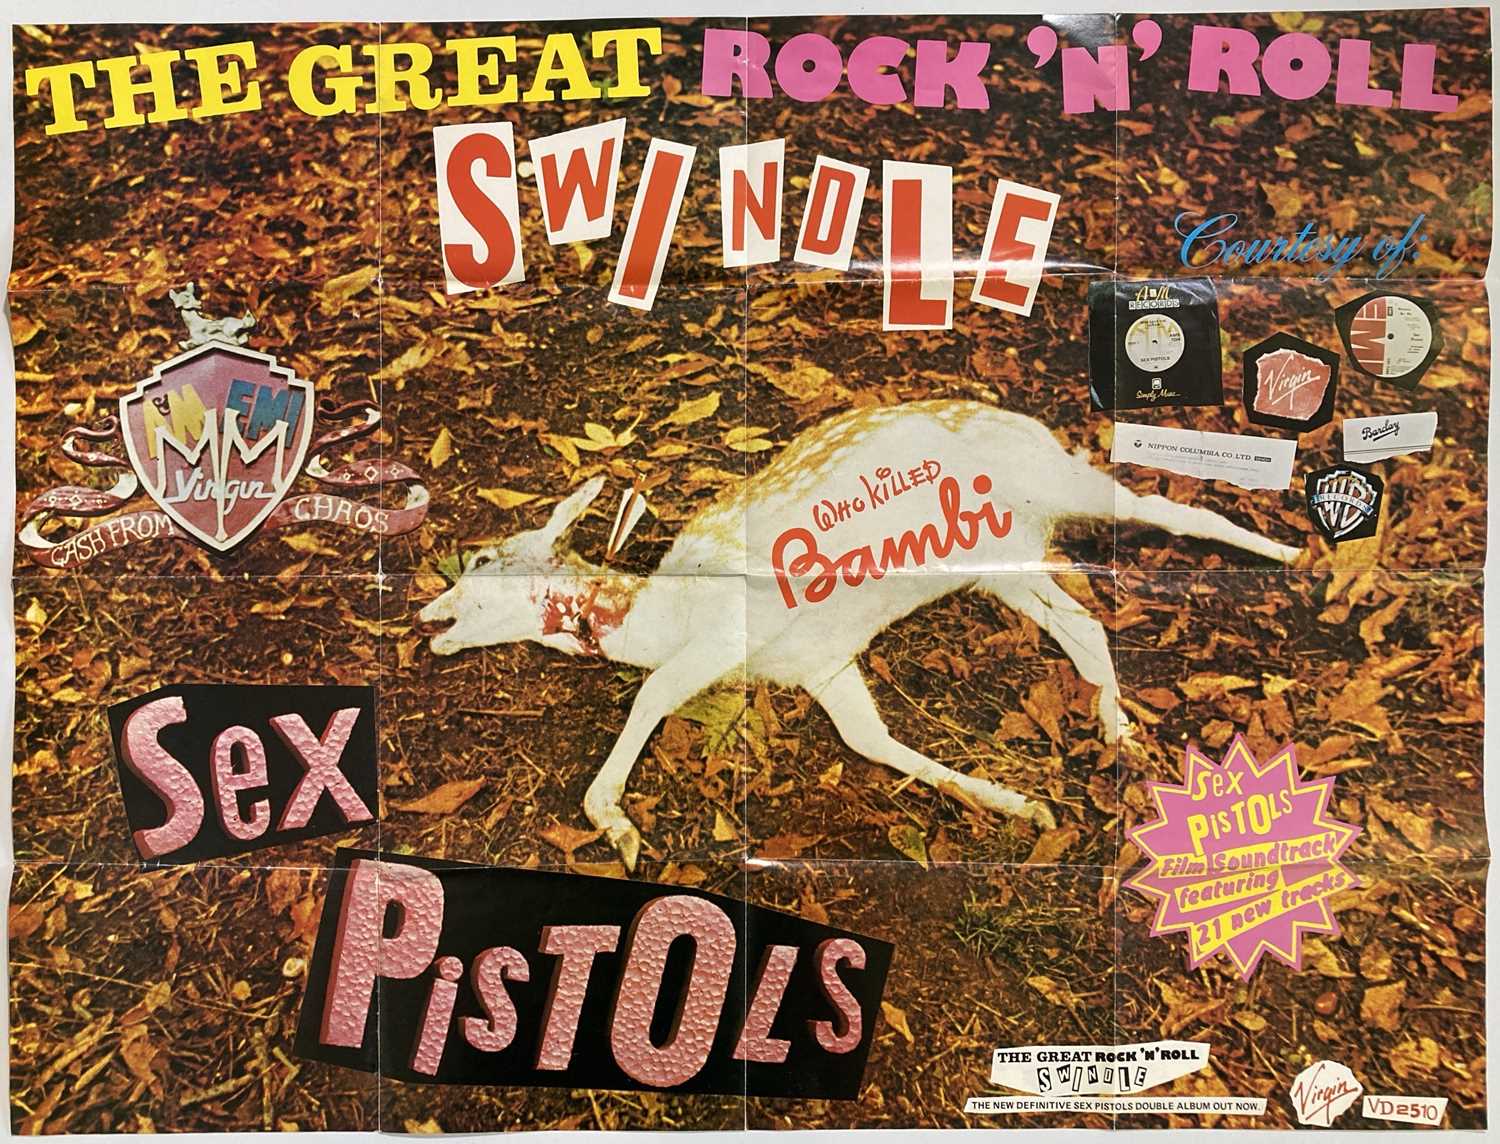 Lot 333 Sex Pistols Who Killed Bambi Poster